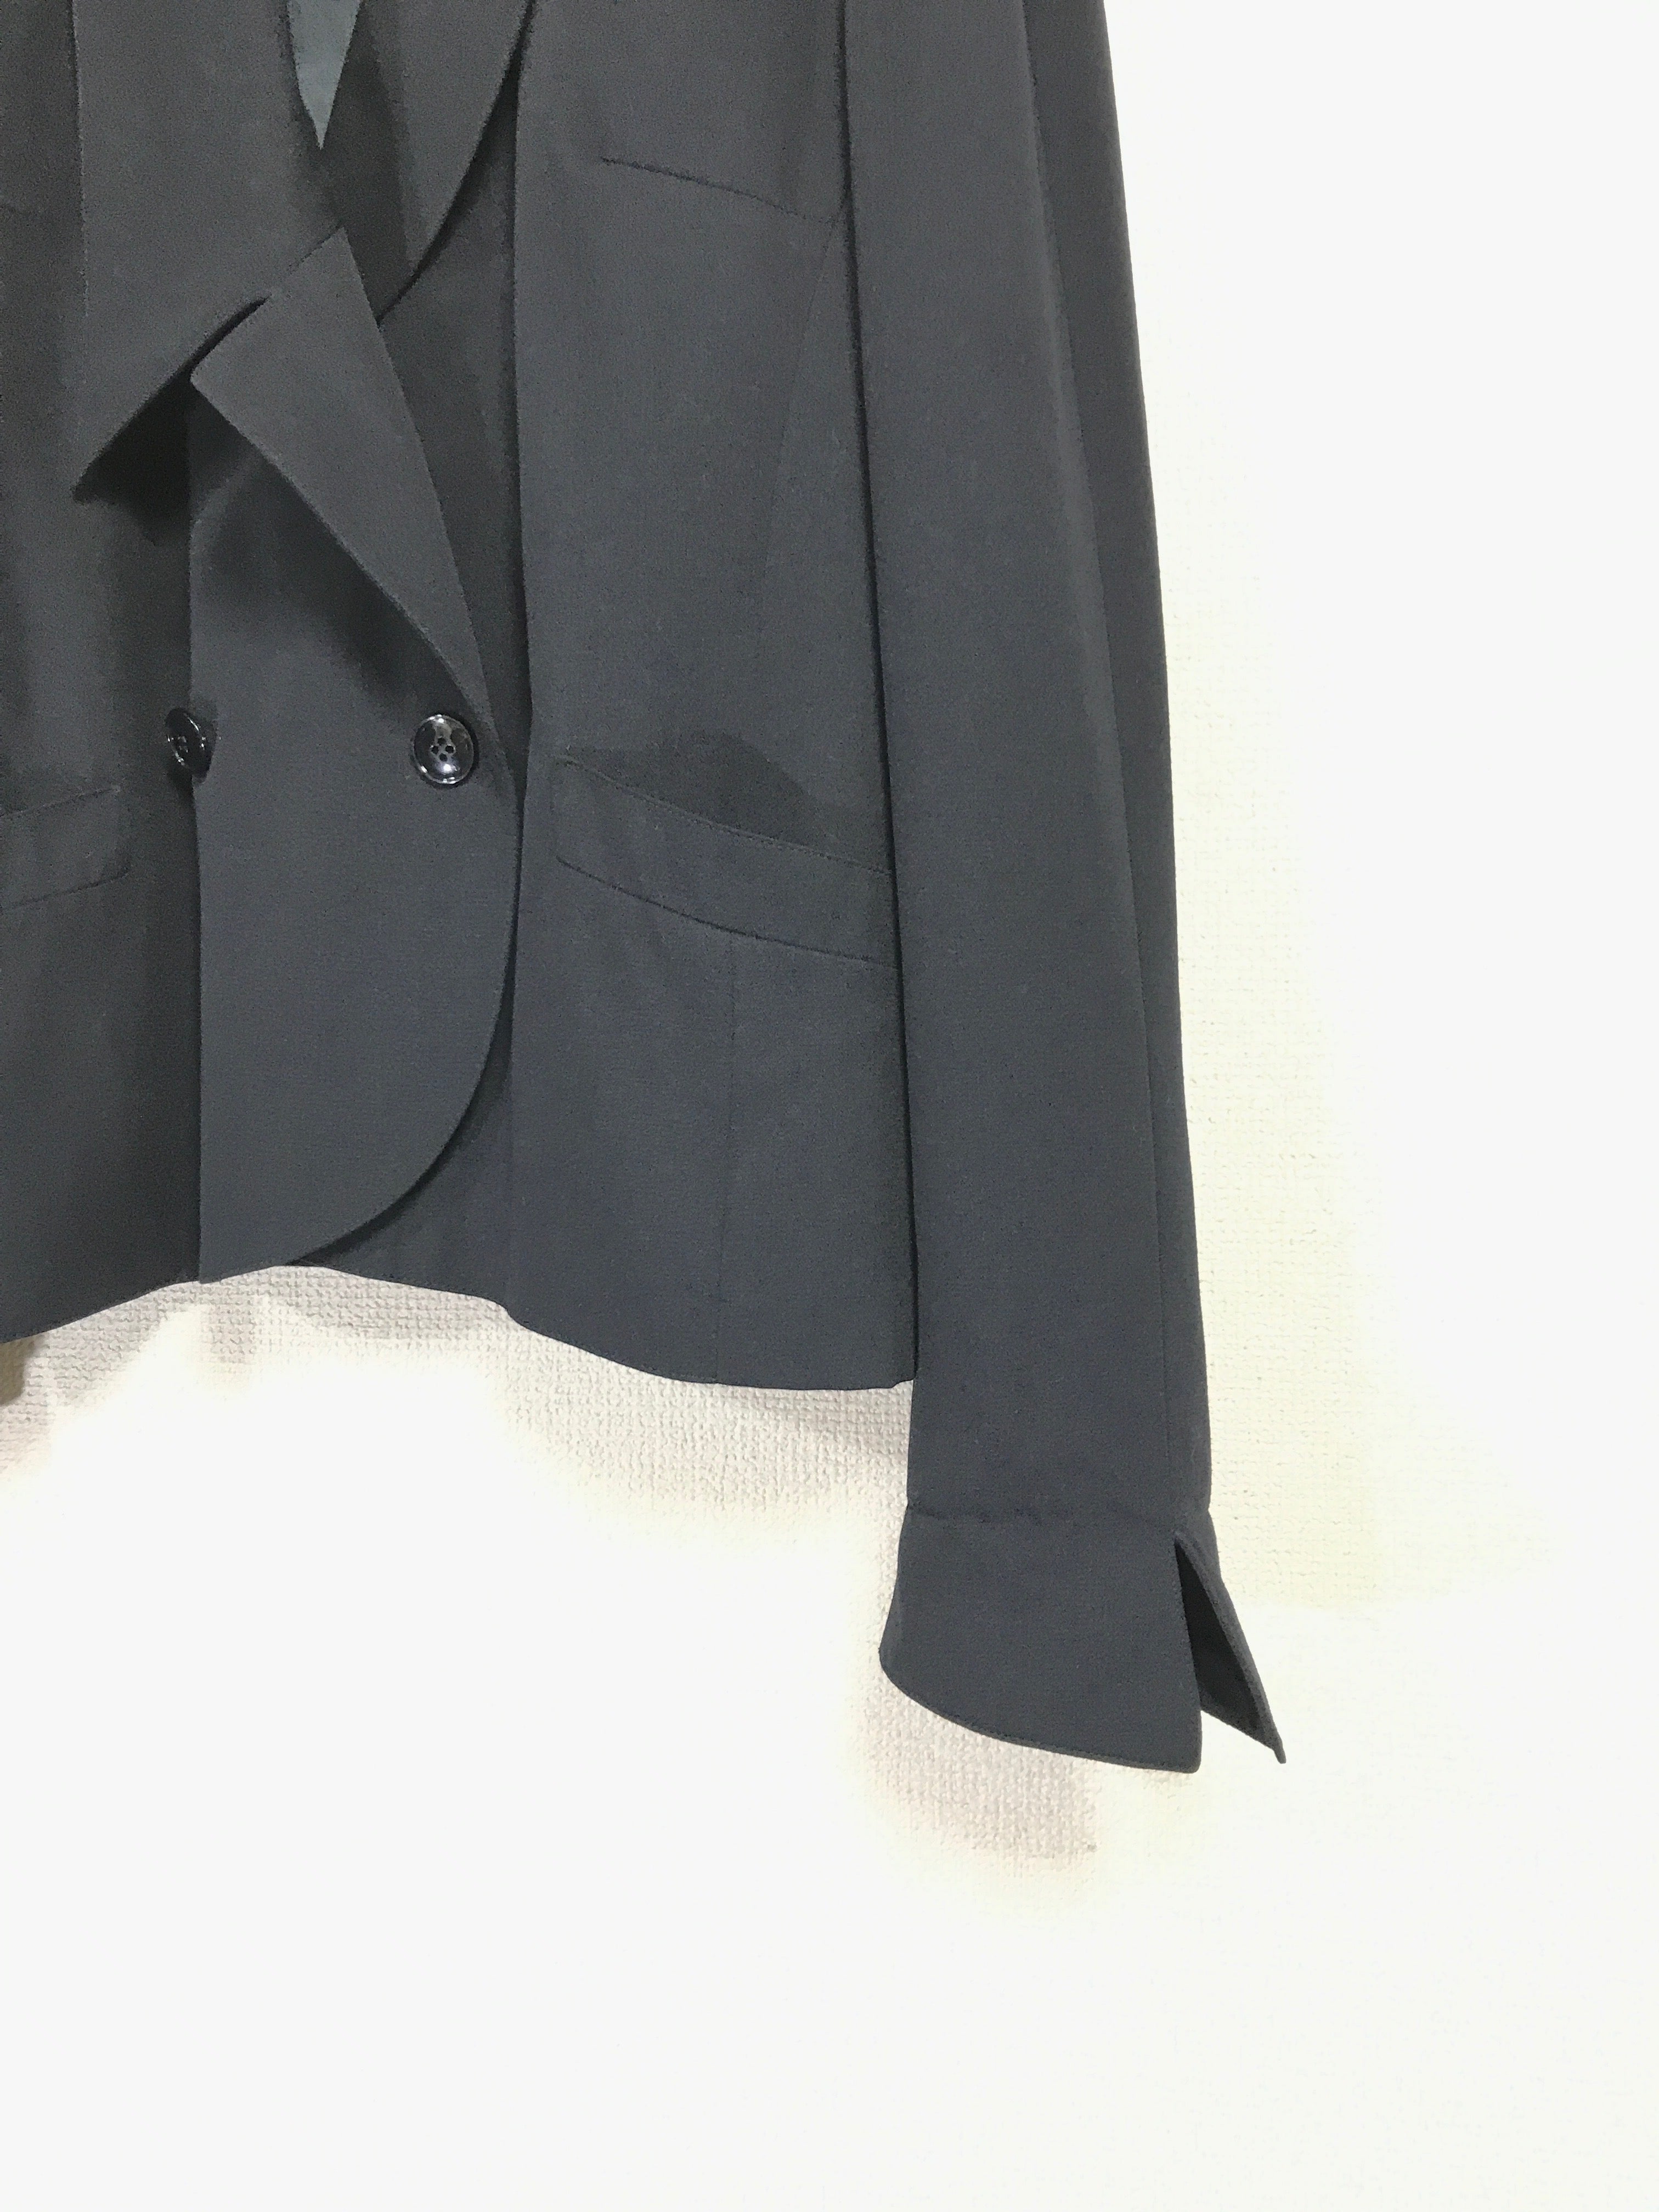 80's Karl Lagerfeld wool/polyester deformed tailored jacket